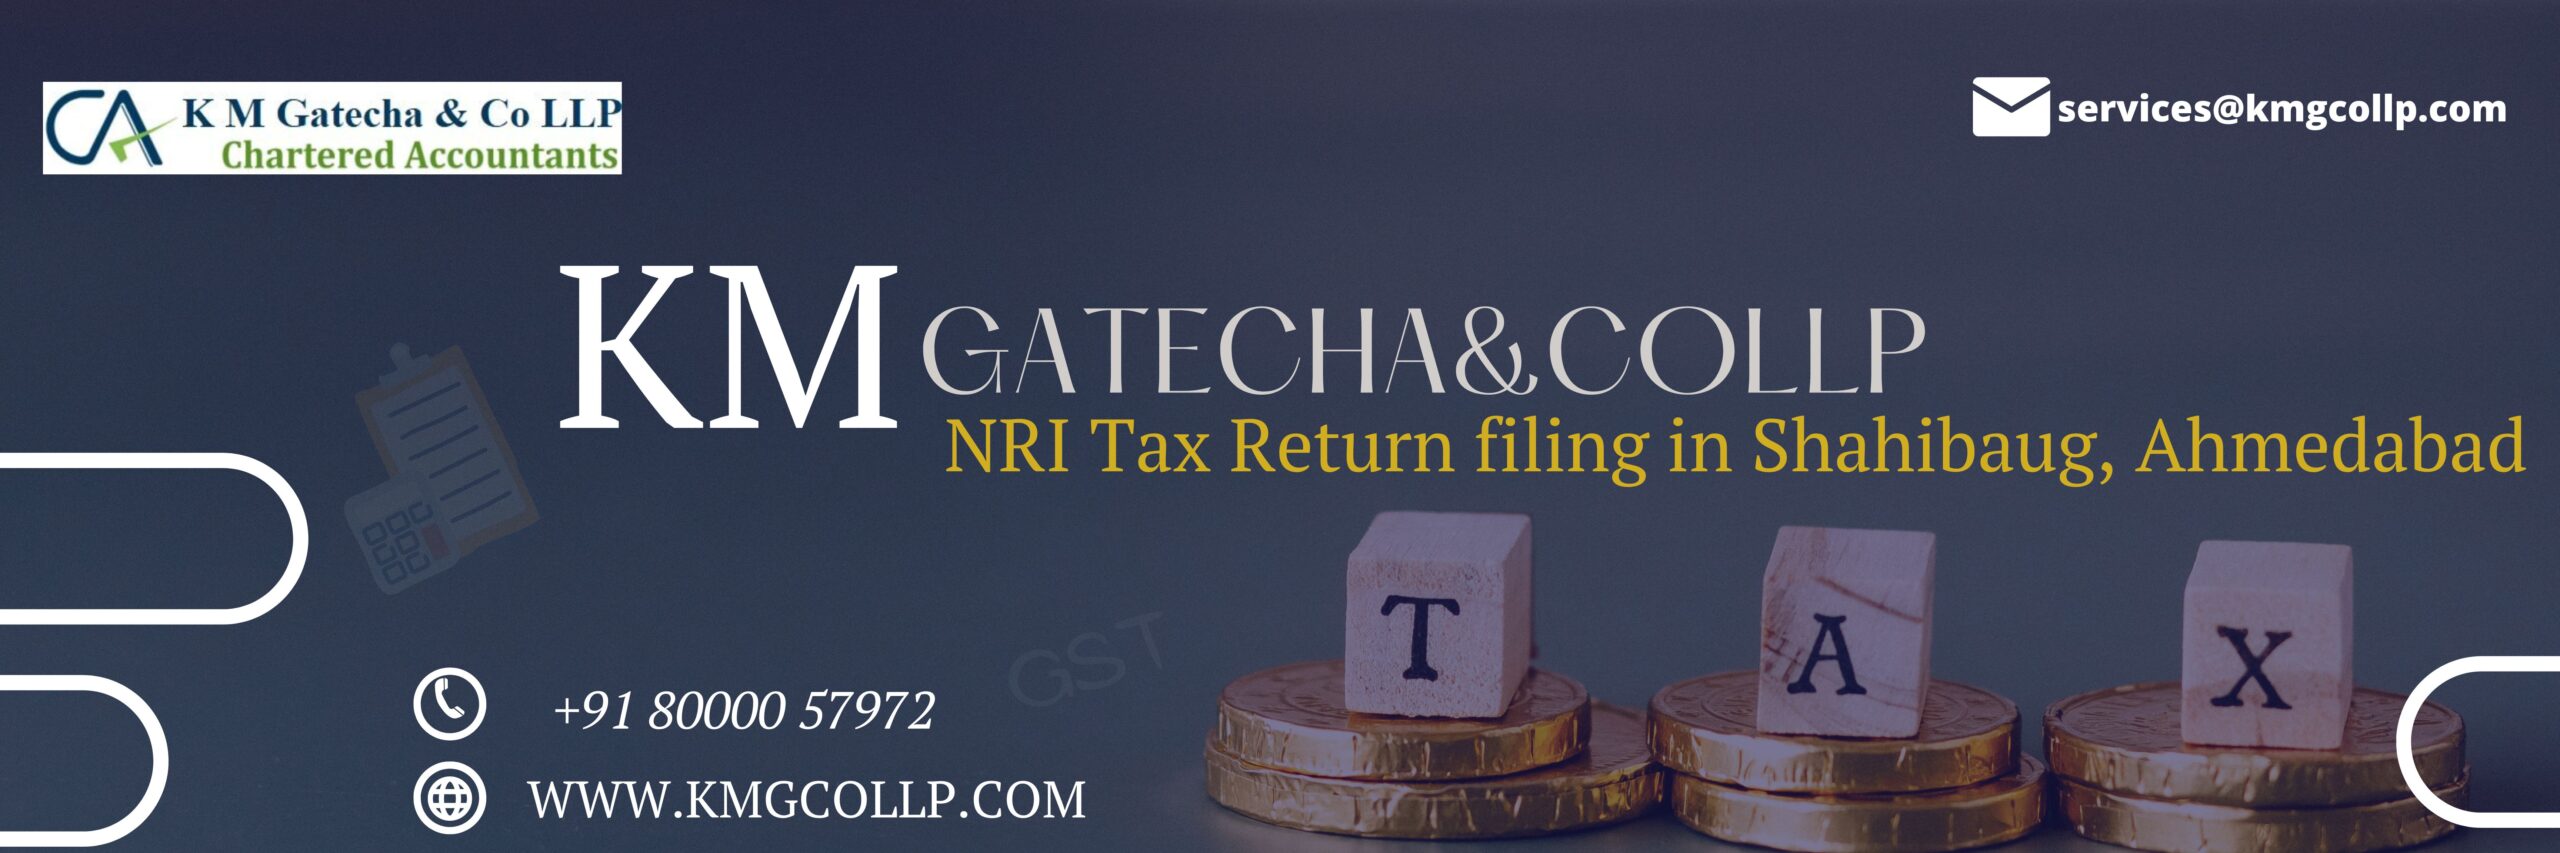 NRI Tax Return filing in Shahibaug, Ahmedabad